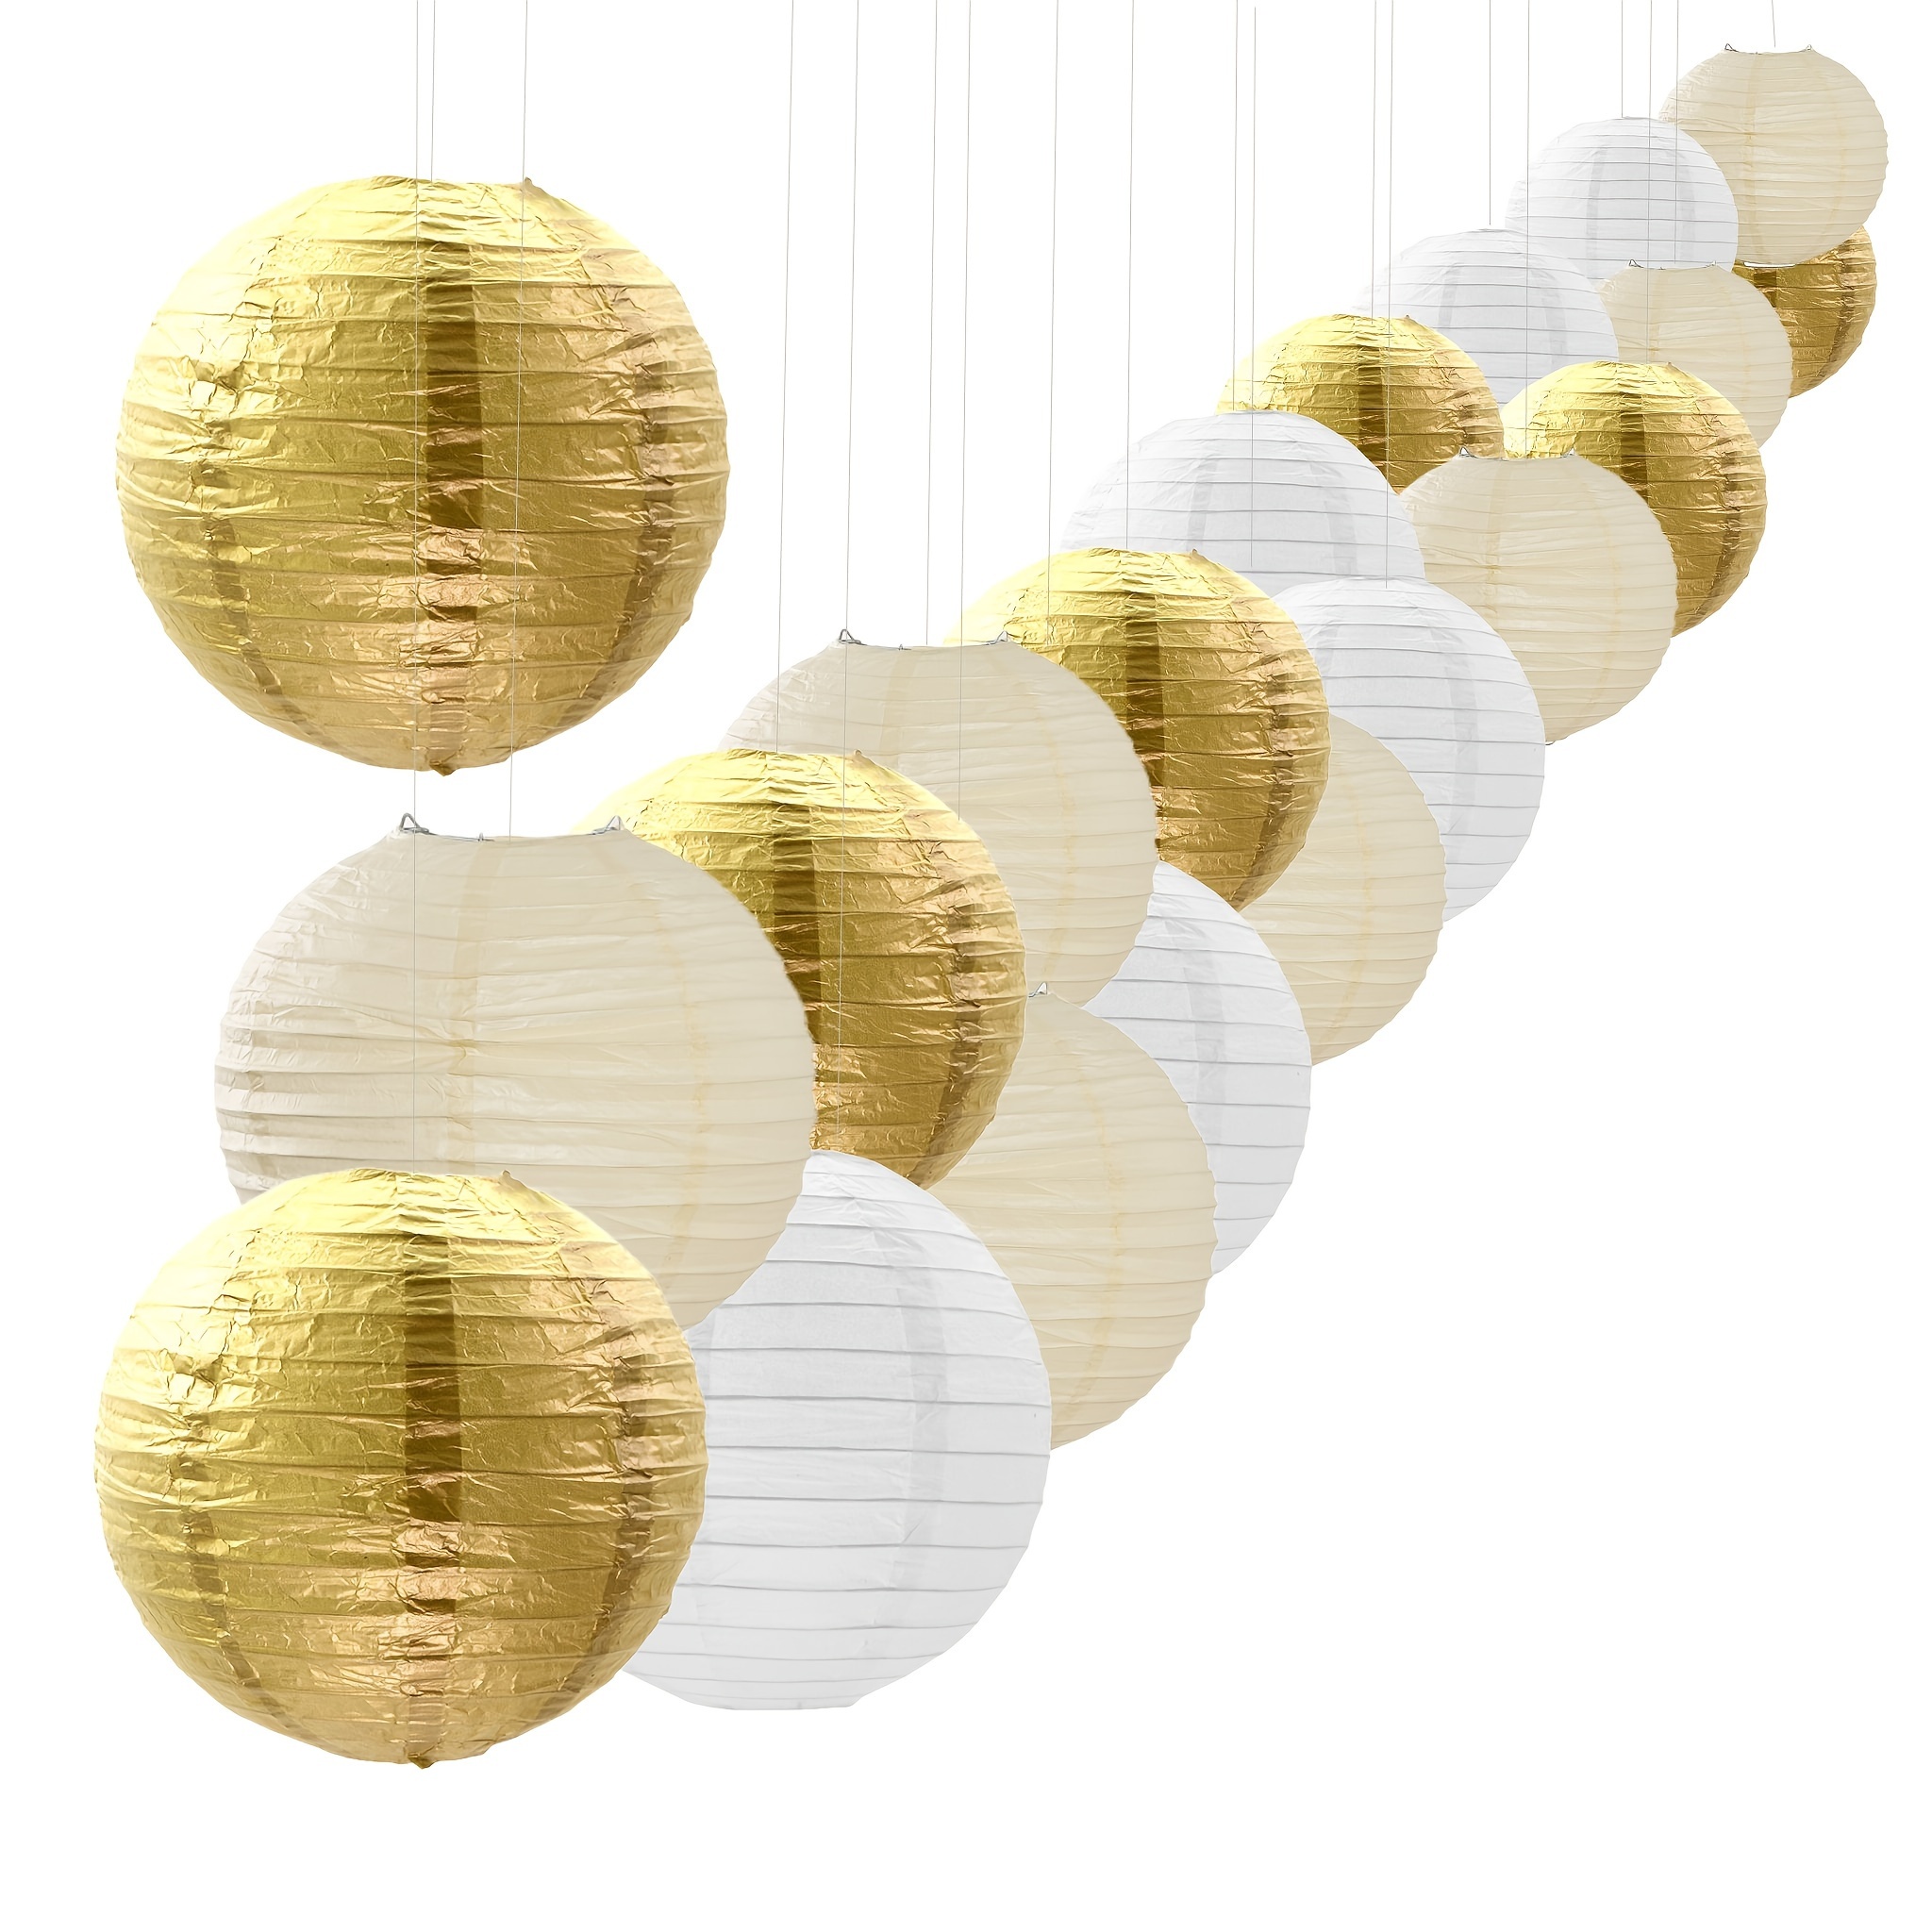 

21pcs White & Golden Paper Lanterns Set - Perfect For Weddings, Birthdays & Baby Showers! Easter Gift